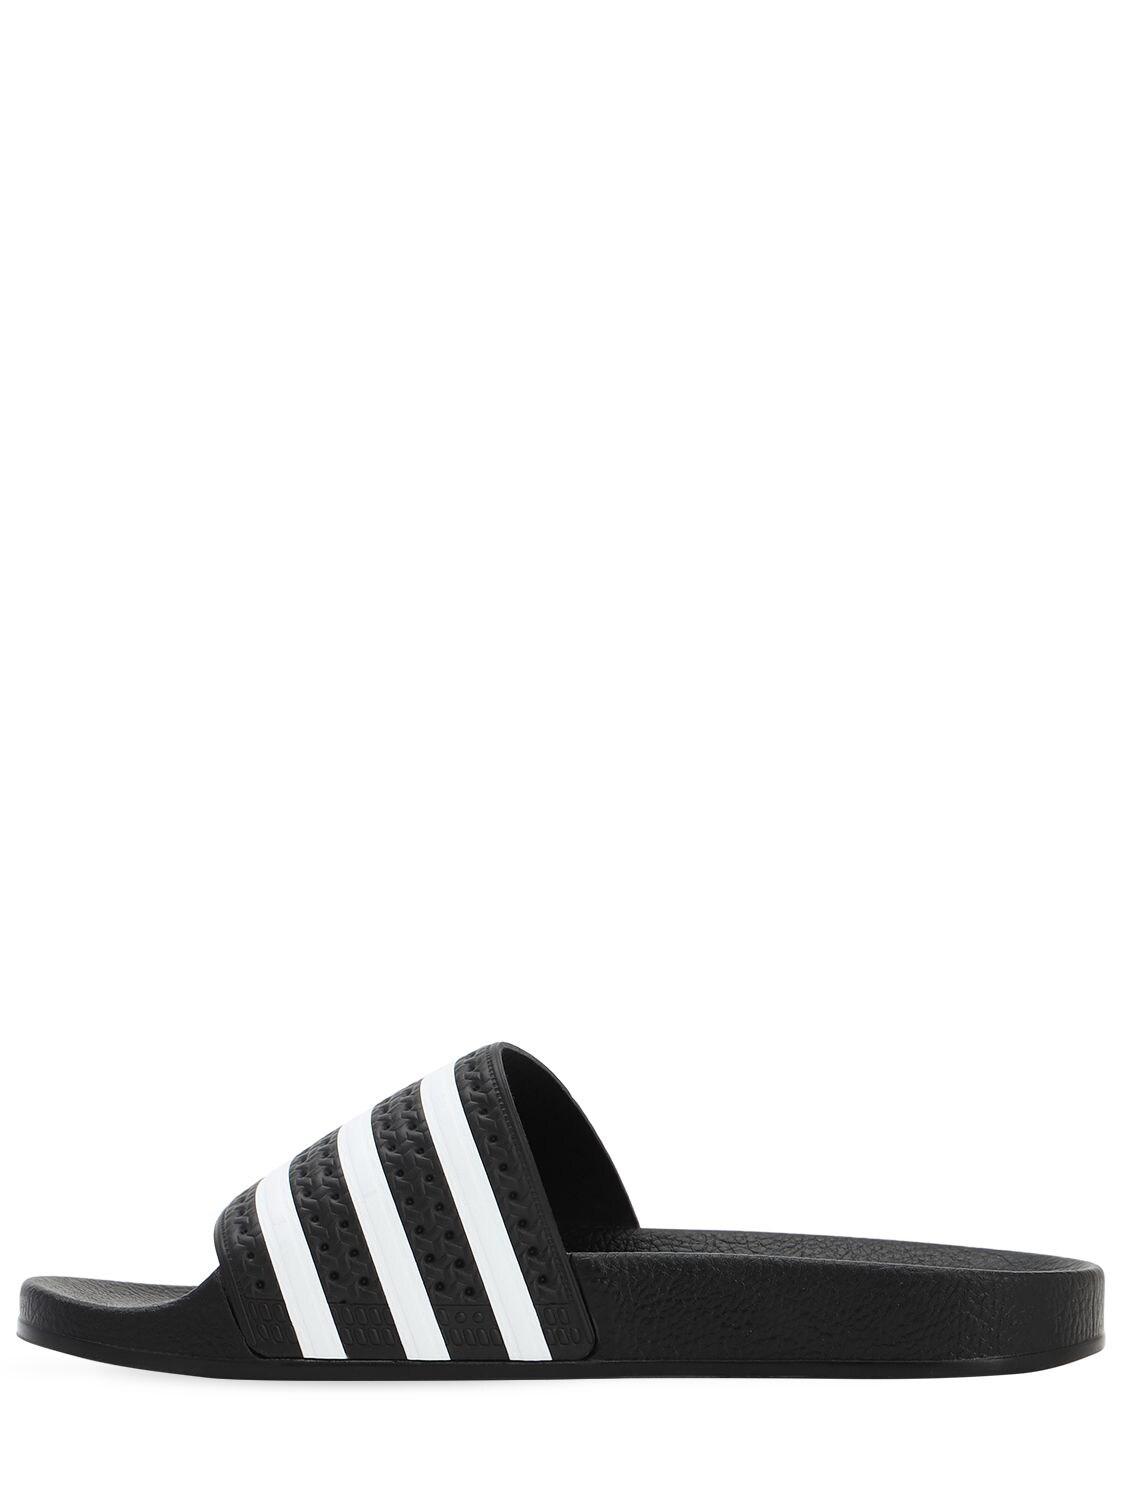 adidas Originals Adilette Striped Slide Sandals in Black/White (Black) -  Lyst